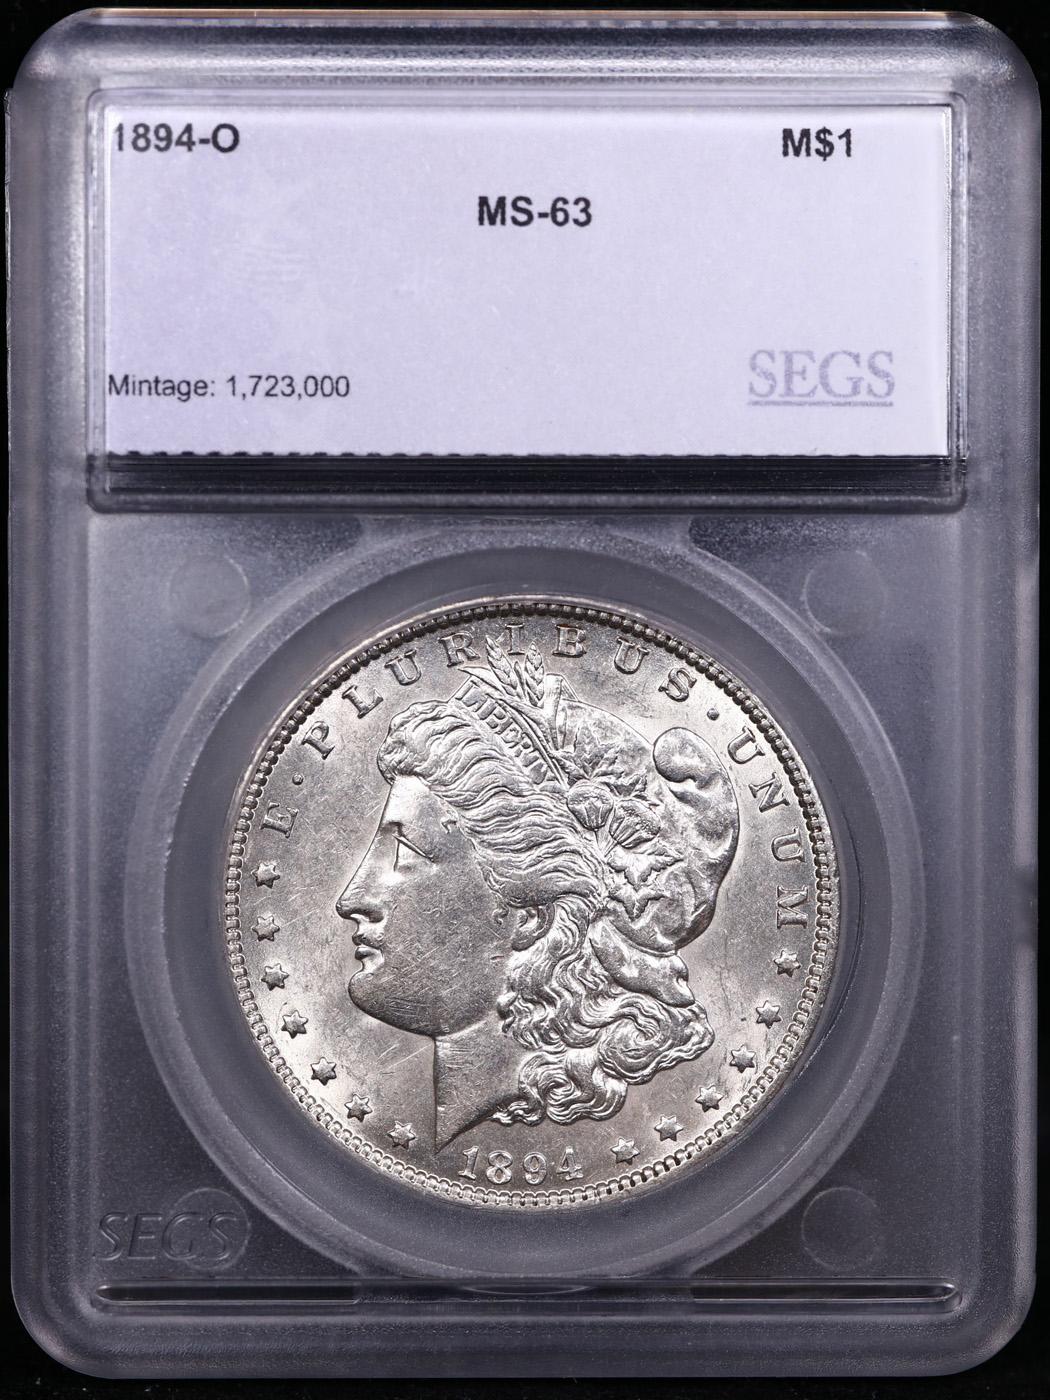 ***Auction Highlight*** 1894-o Morgan Dollar $1 Graded ms63 By SEGS (fc)